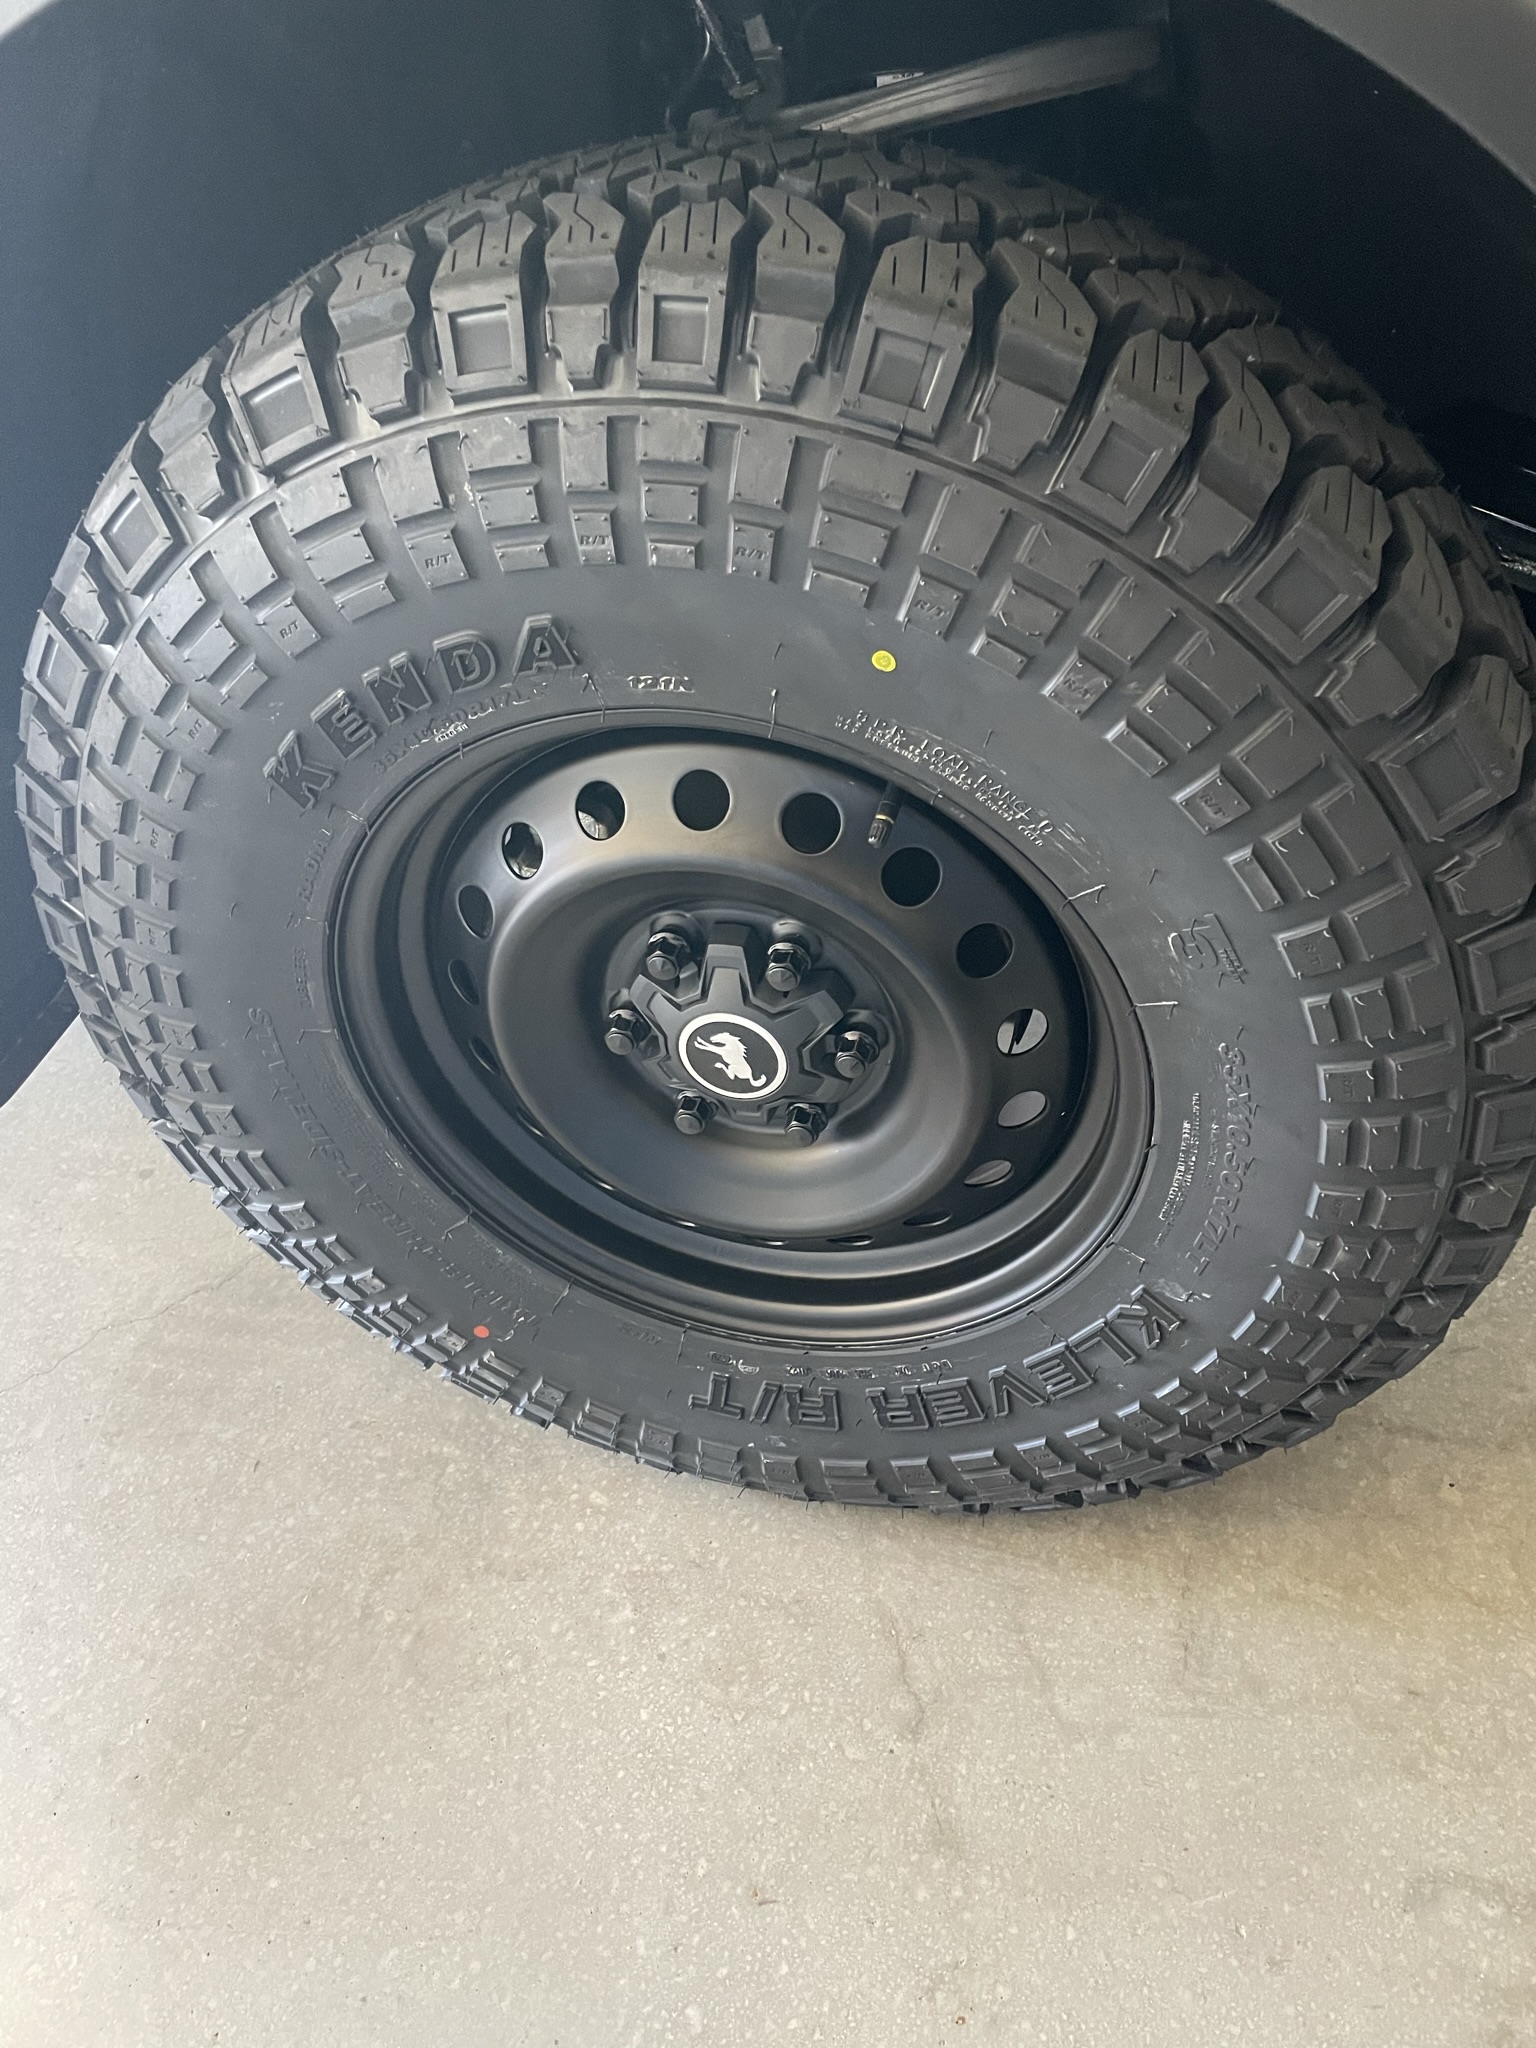 Ford Bronco Show us your installed wheel / tire upgrades here! (Pics) 637F3DBF-E95F-43C6-8A3A-115AECBC4010